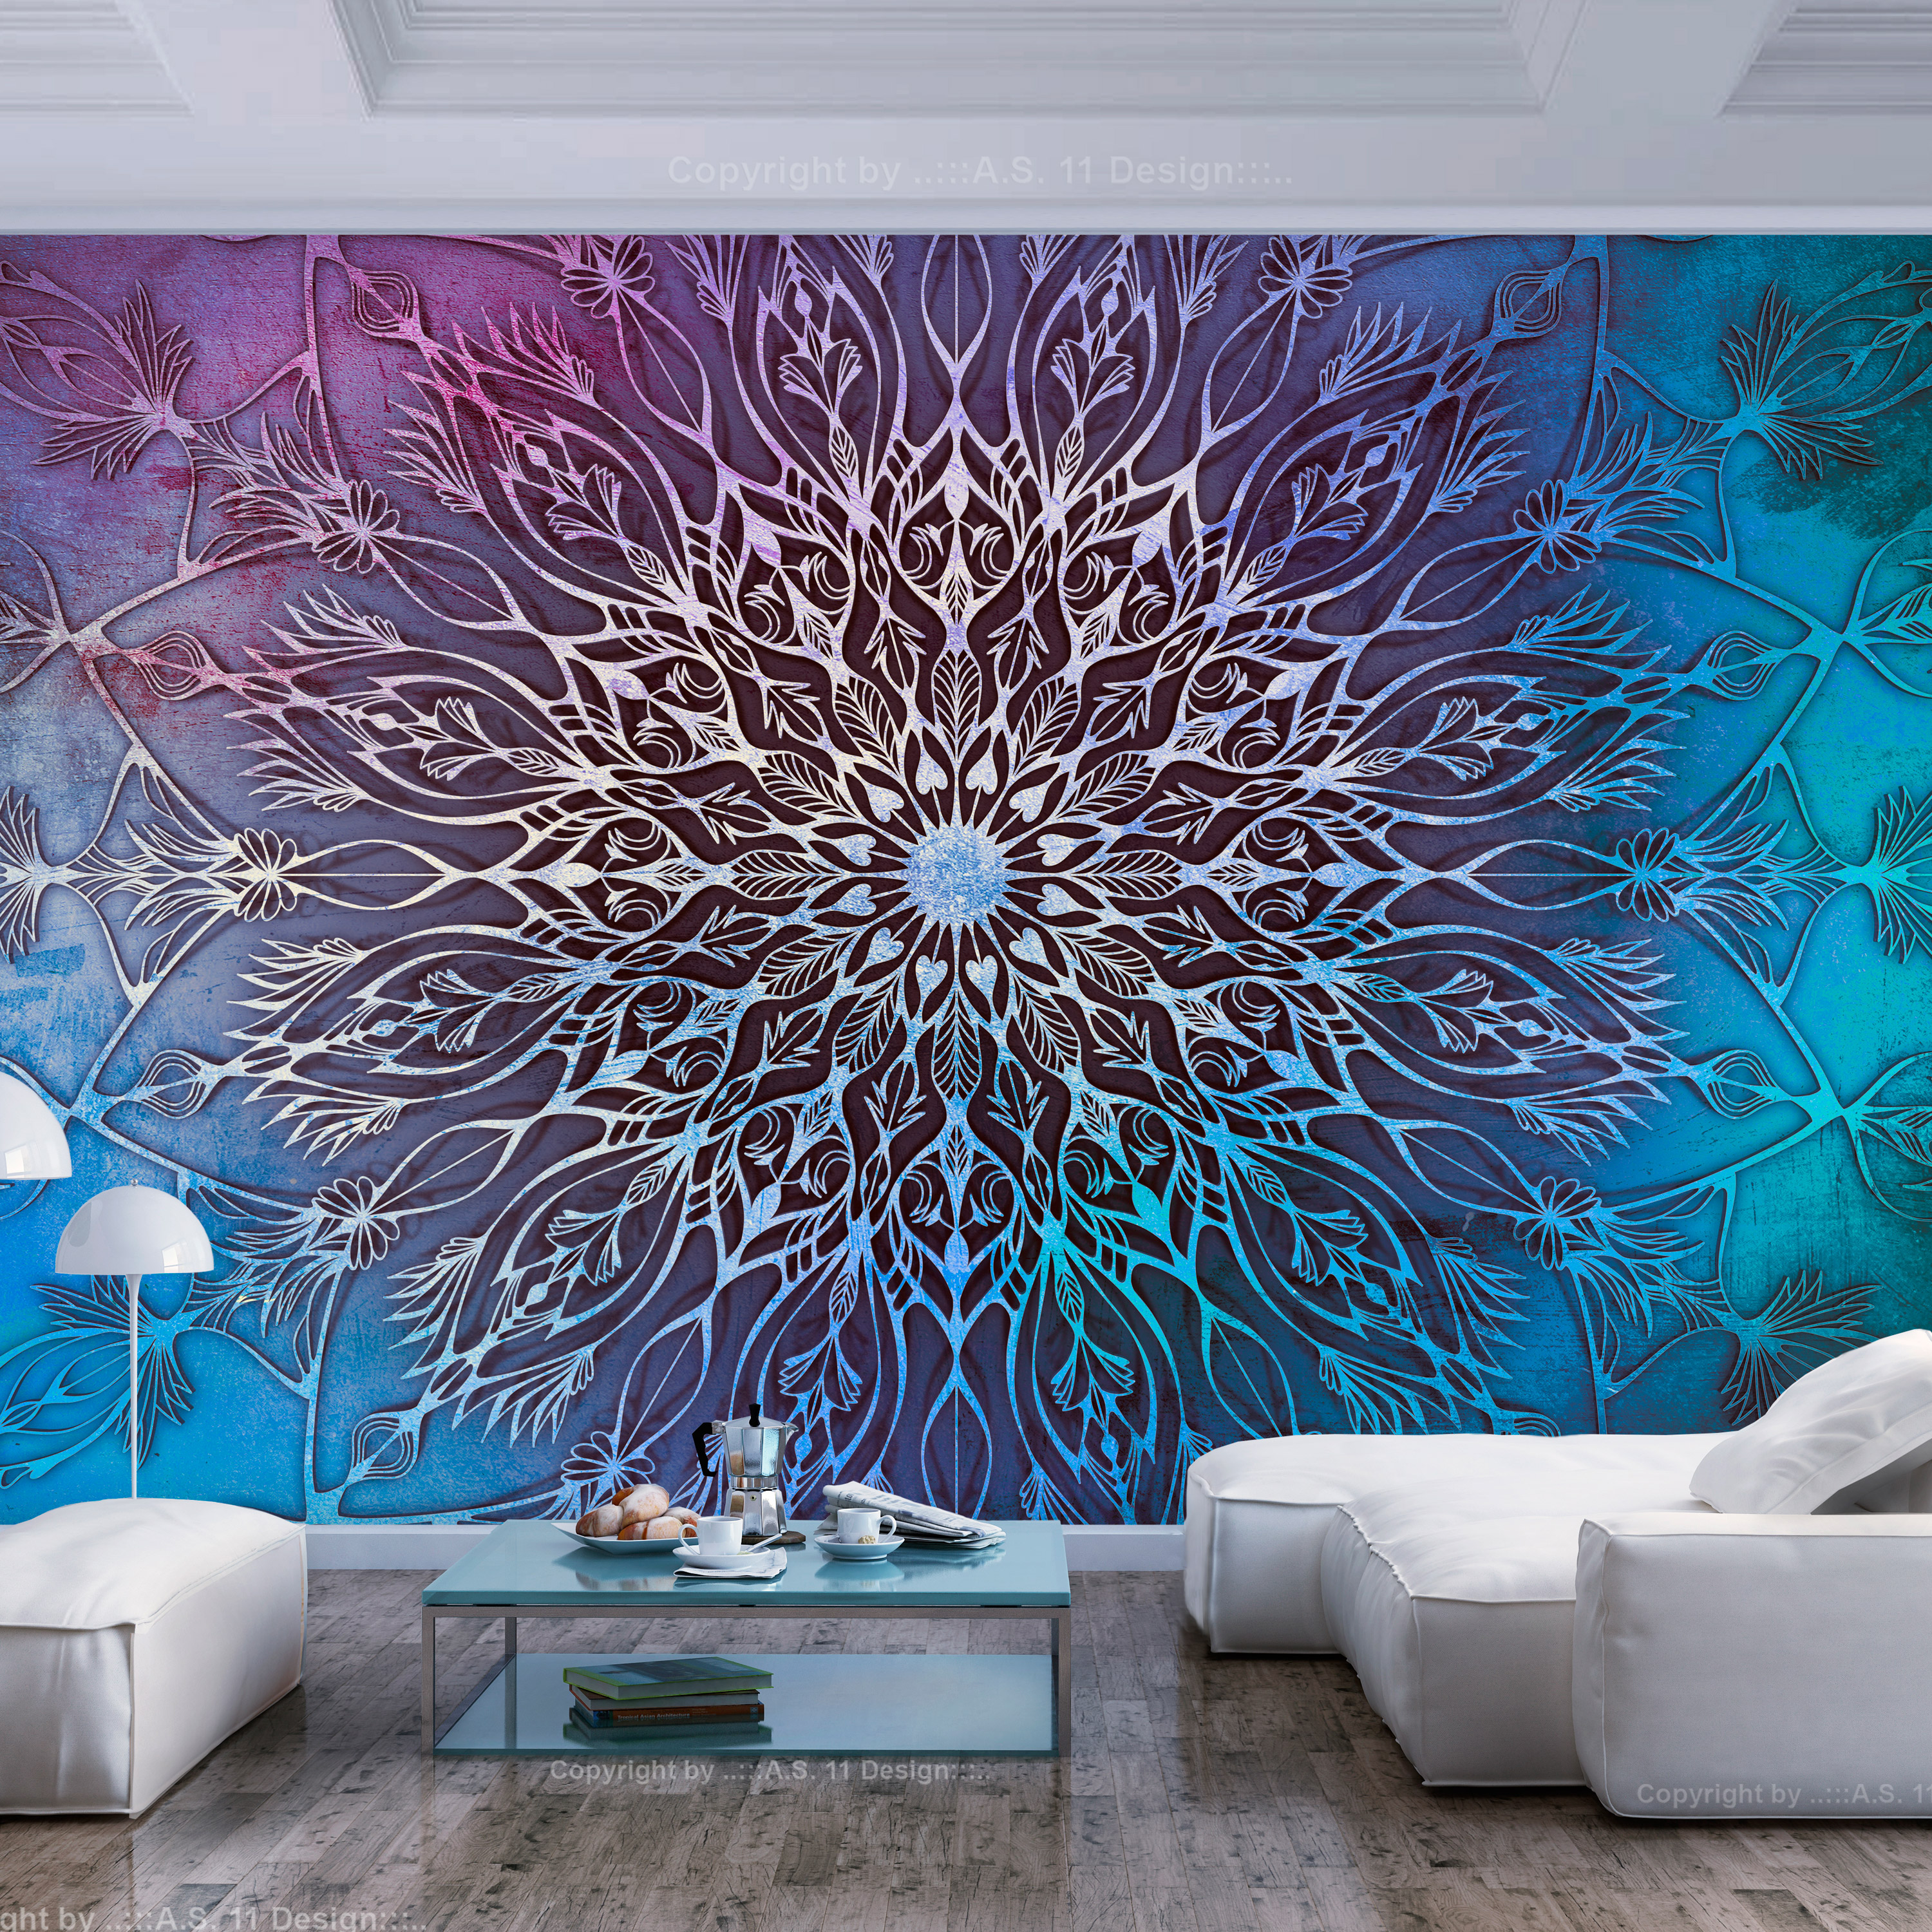 Self-adhesive Wallpaper - Center (Blue) - 392x280